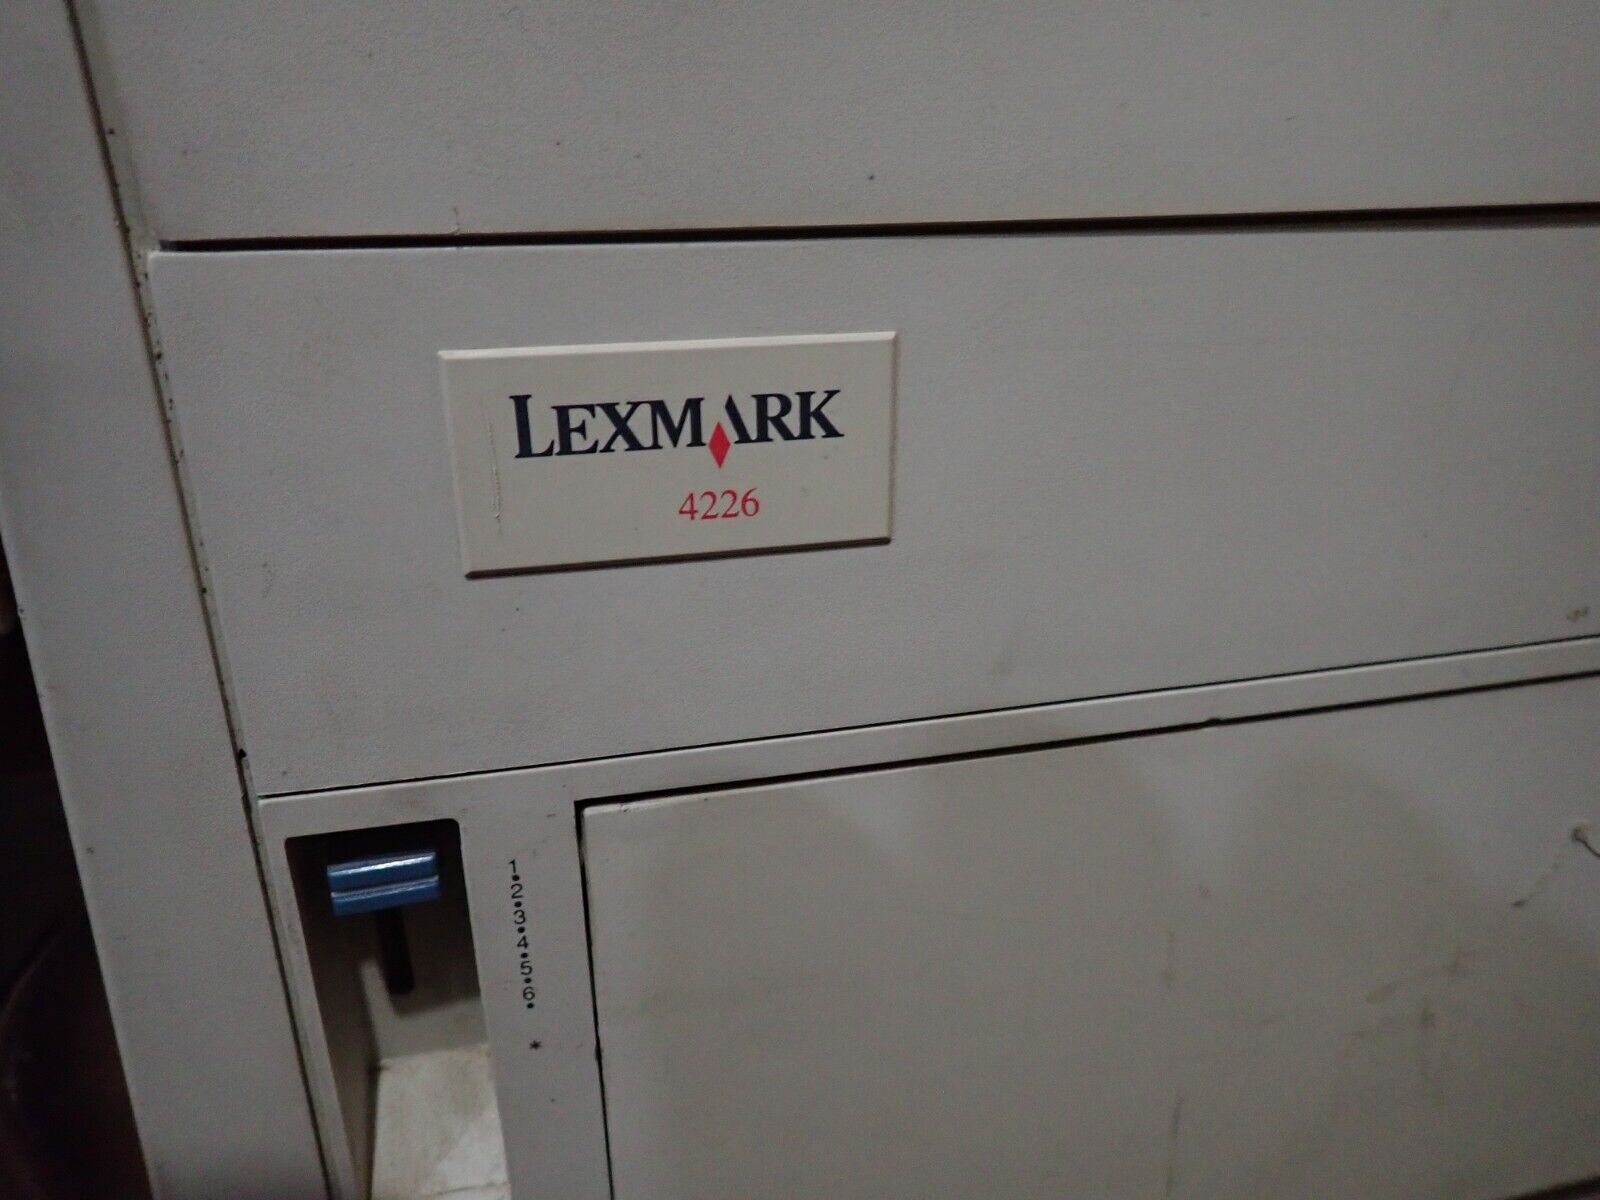 Lexmark Printer 4226